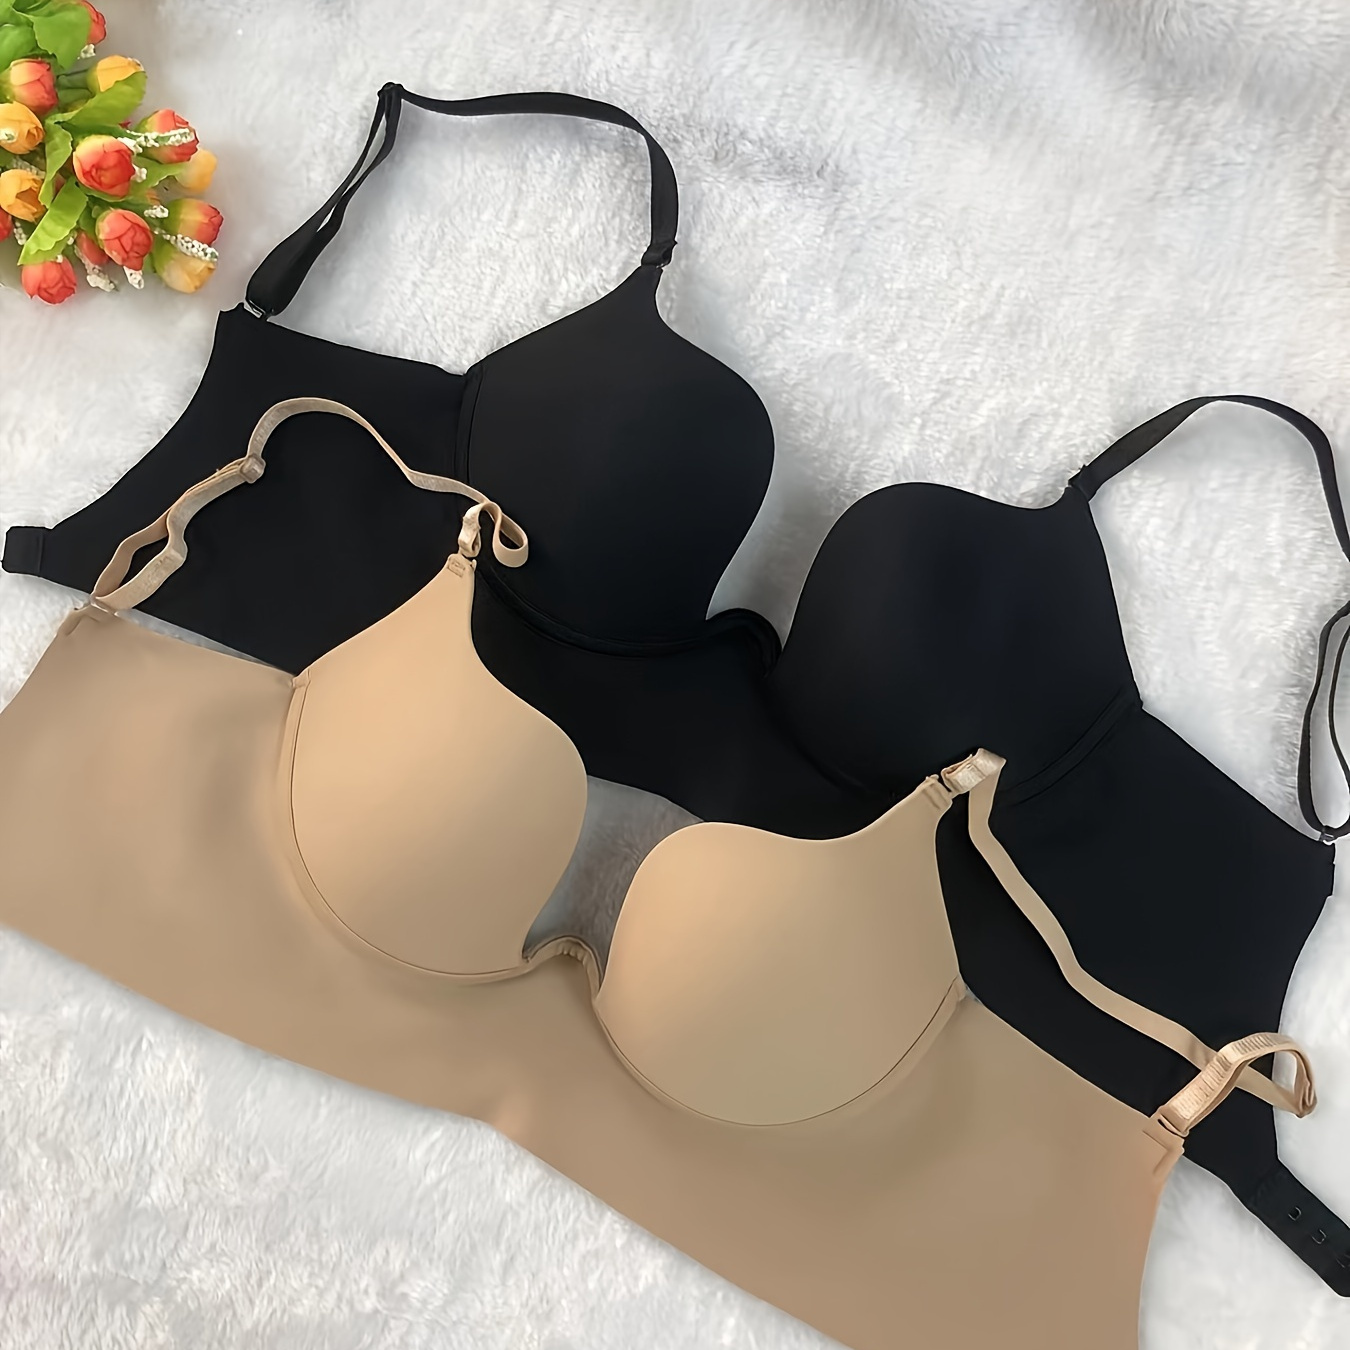 

2 Pcs Simple U-shaped Seamless Bra, Comfy & Breathable Bra, Women's Lingerie & Underwear